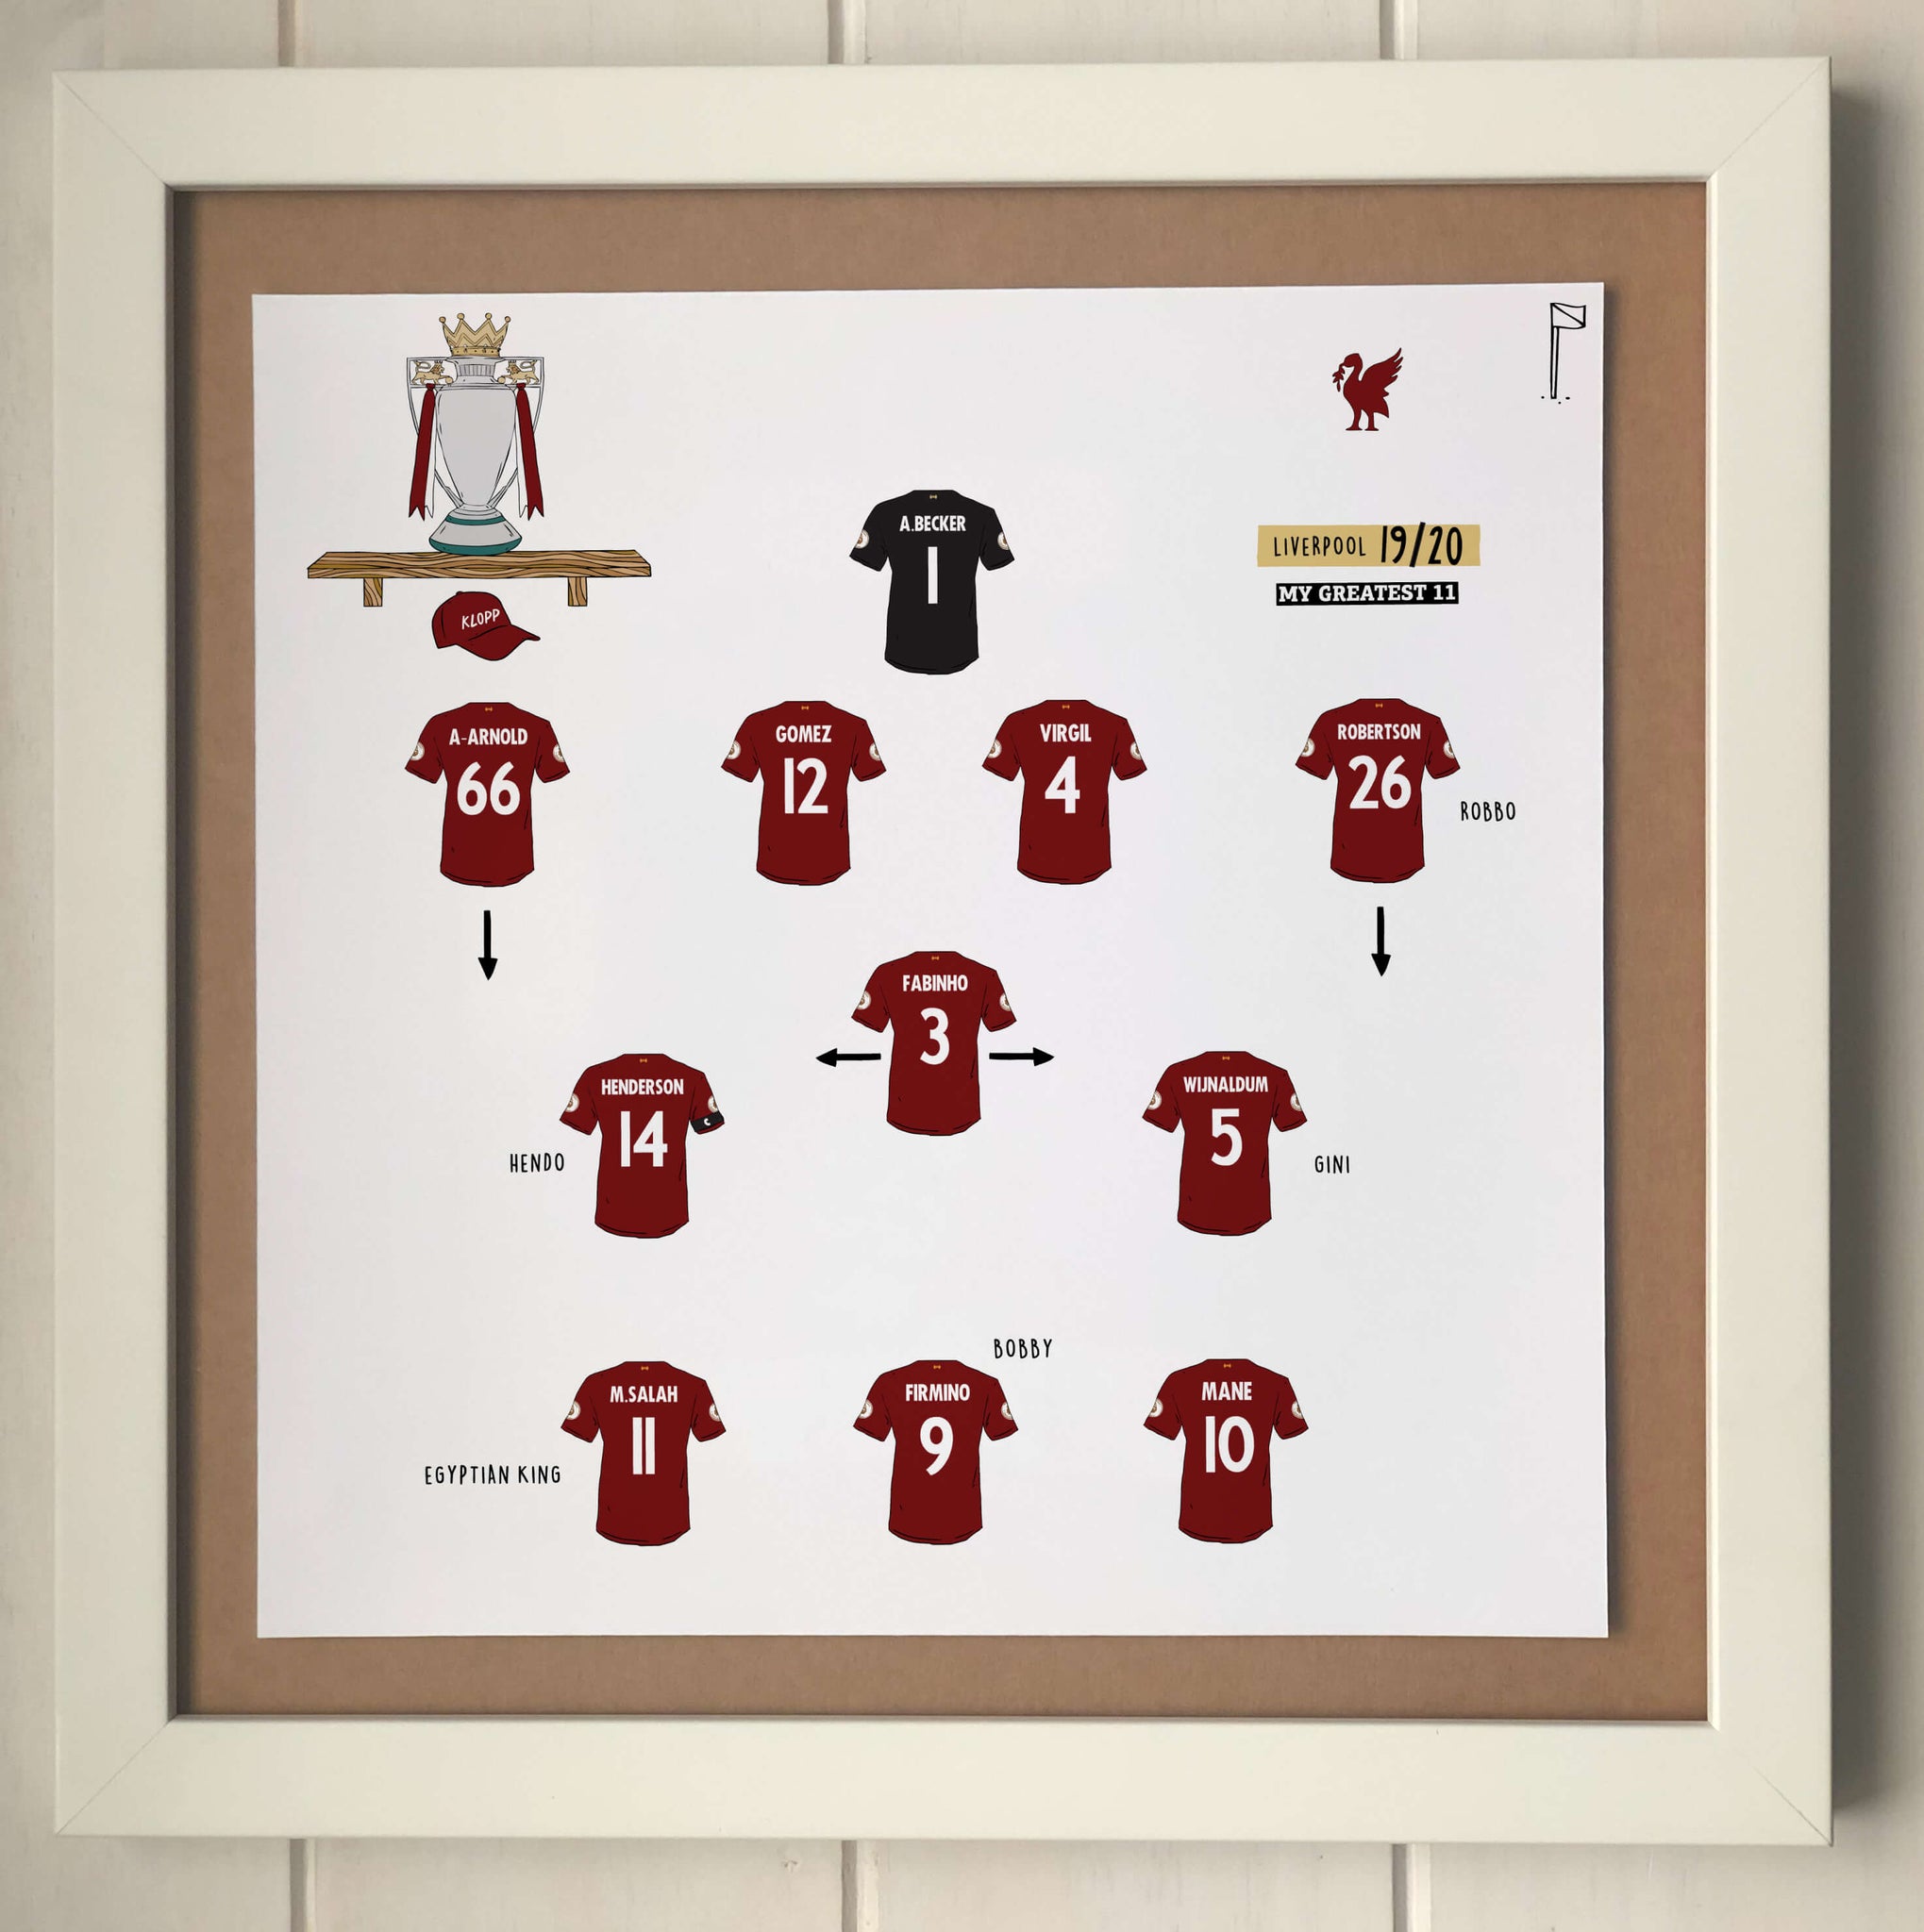 Liverpool 19/20 Team Print